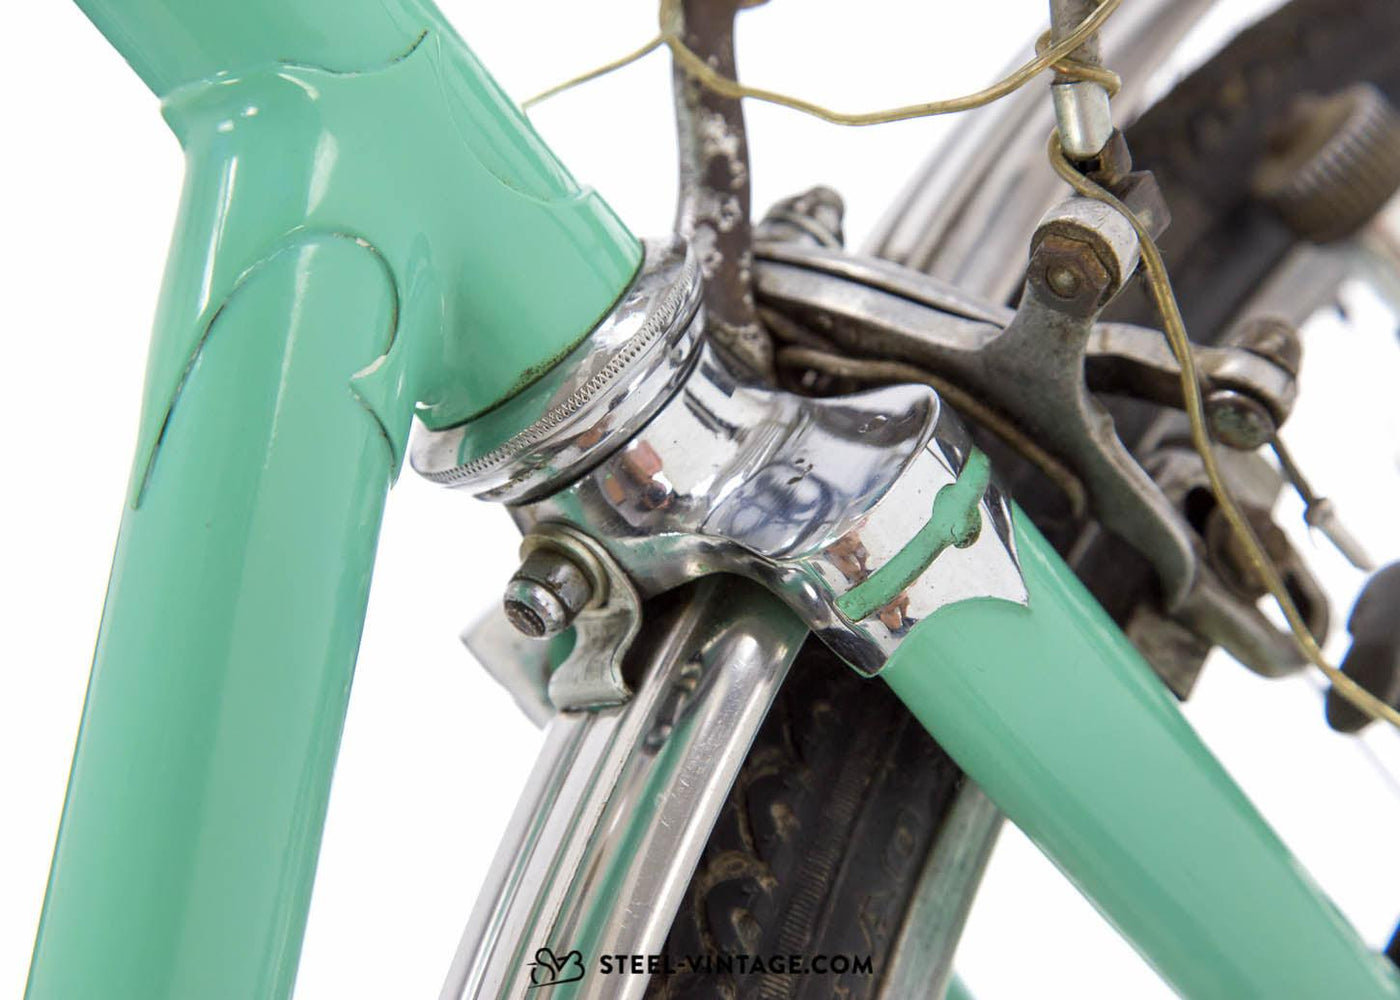 Celeste City Bike 1950s - Steel Vintage Bikes